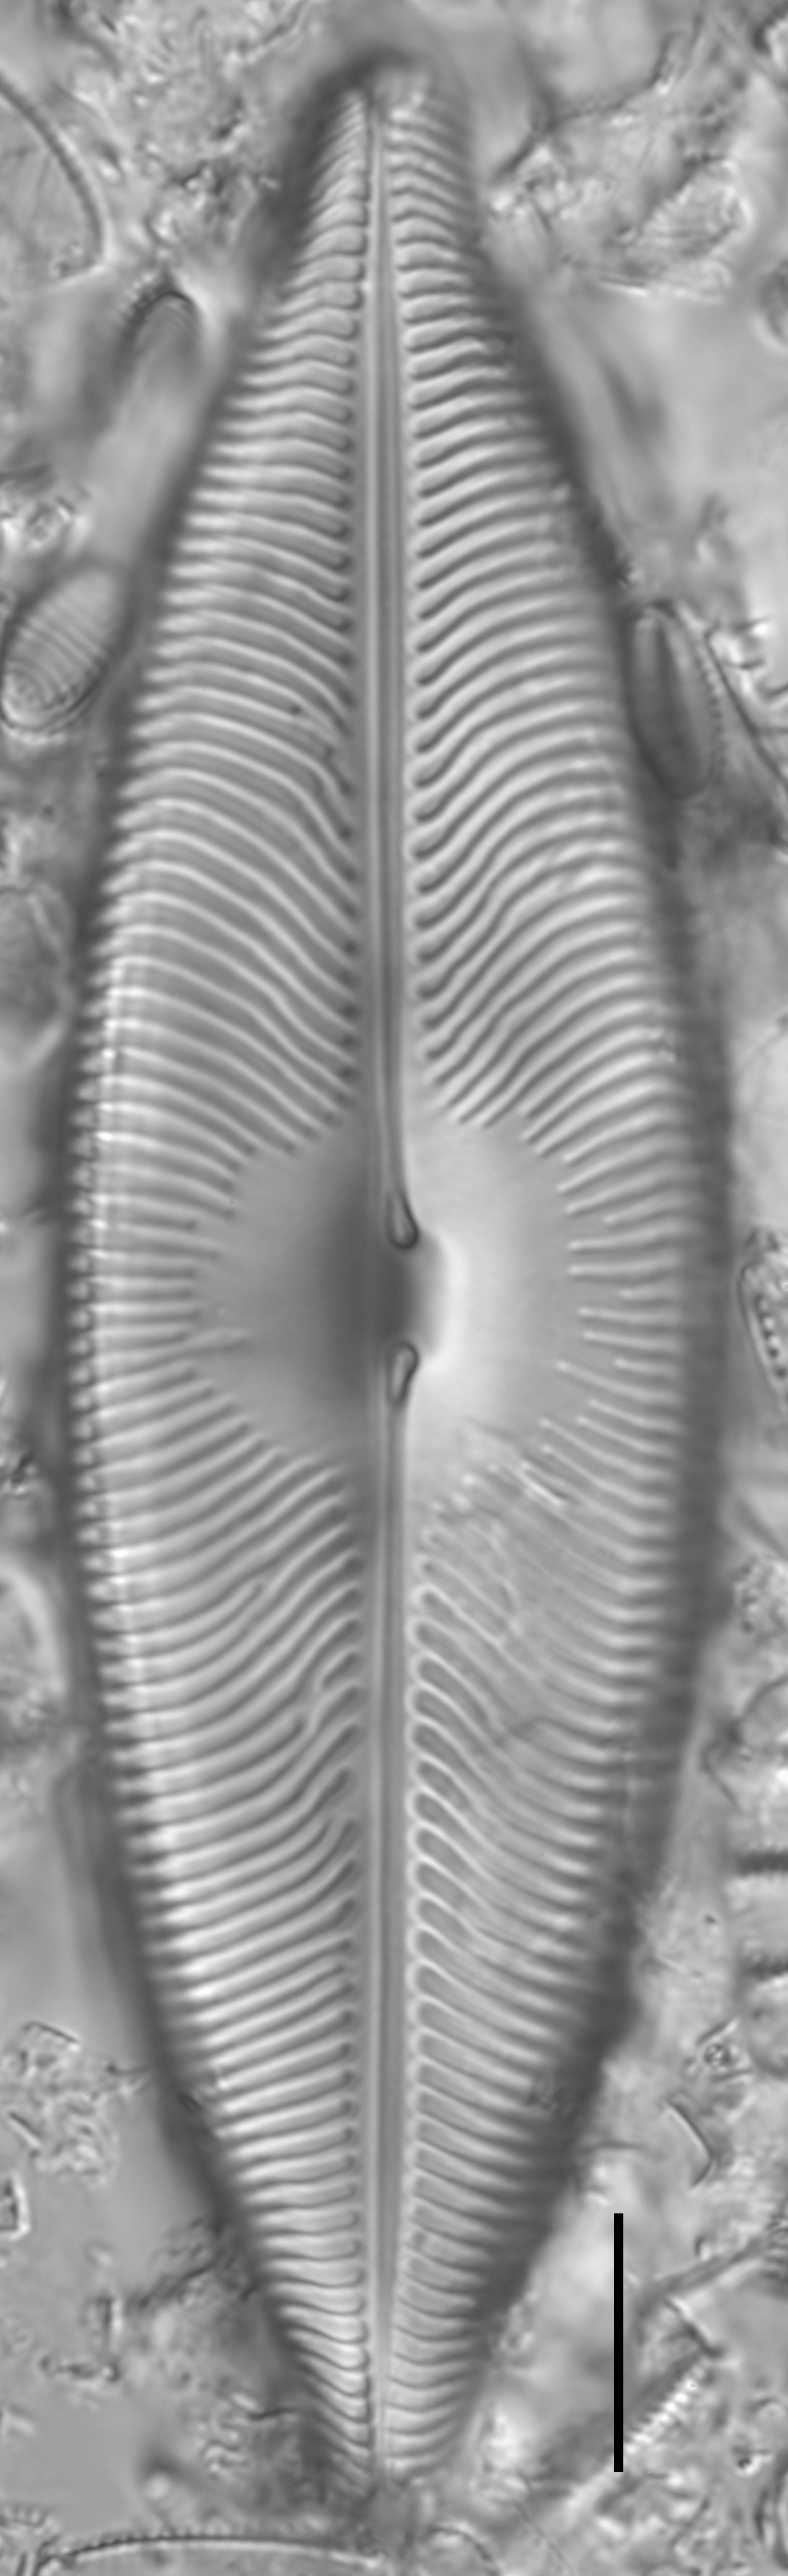 Pinnunavis elegans LM6